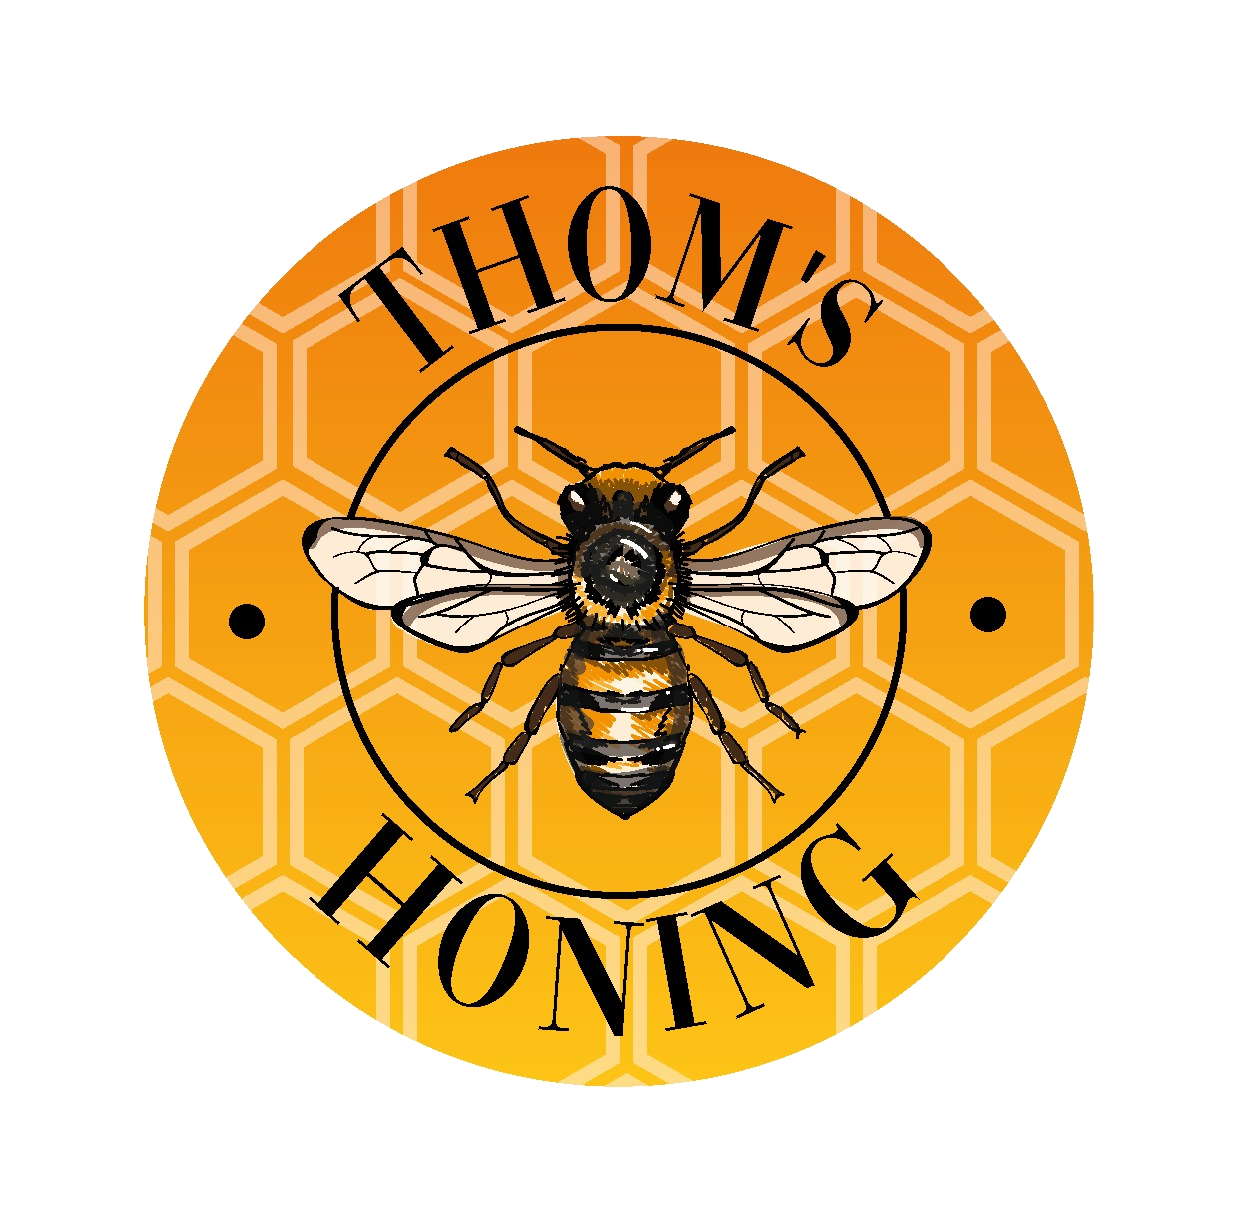 Thom’s Honing